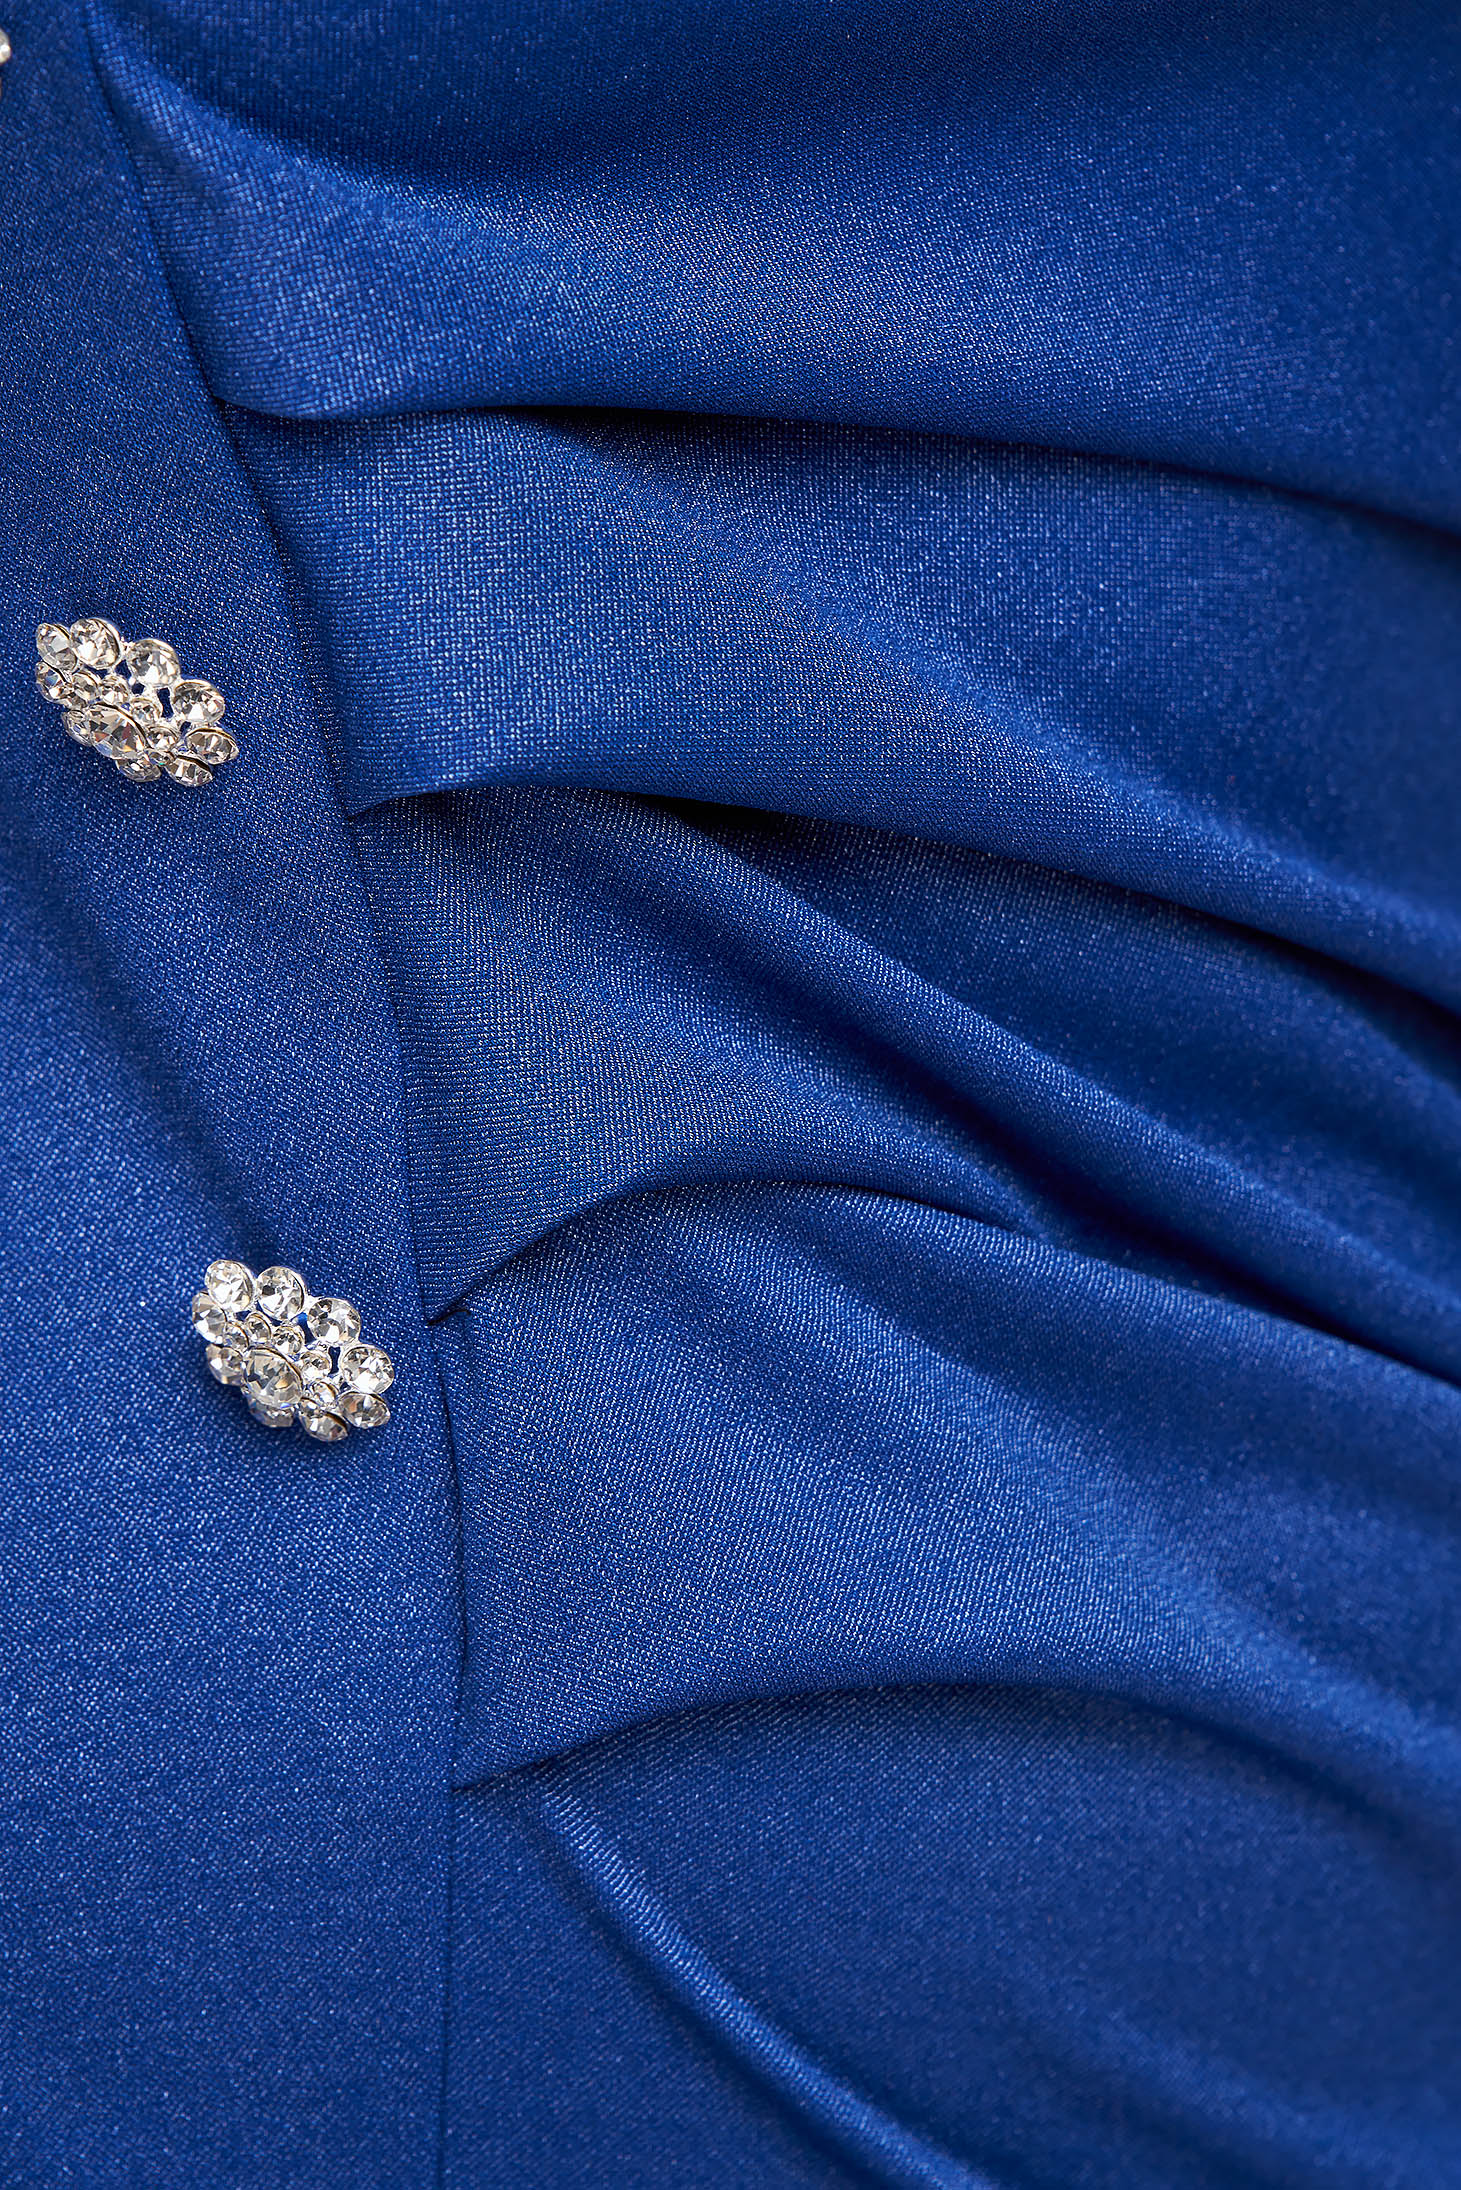 Rochie din crep albastra tip creion crapata pe picior cu nasturi decorativi - StarShinerS 6 - StarShinerS.ro